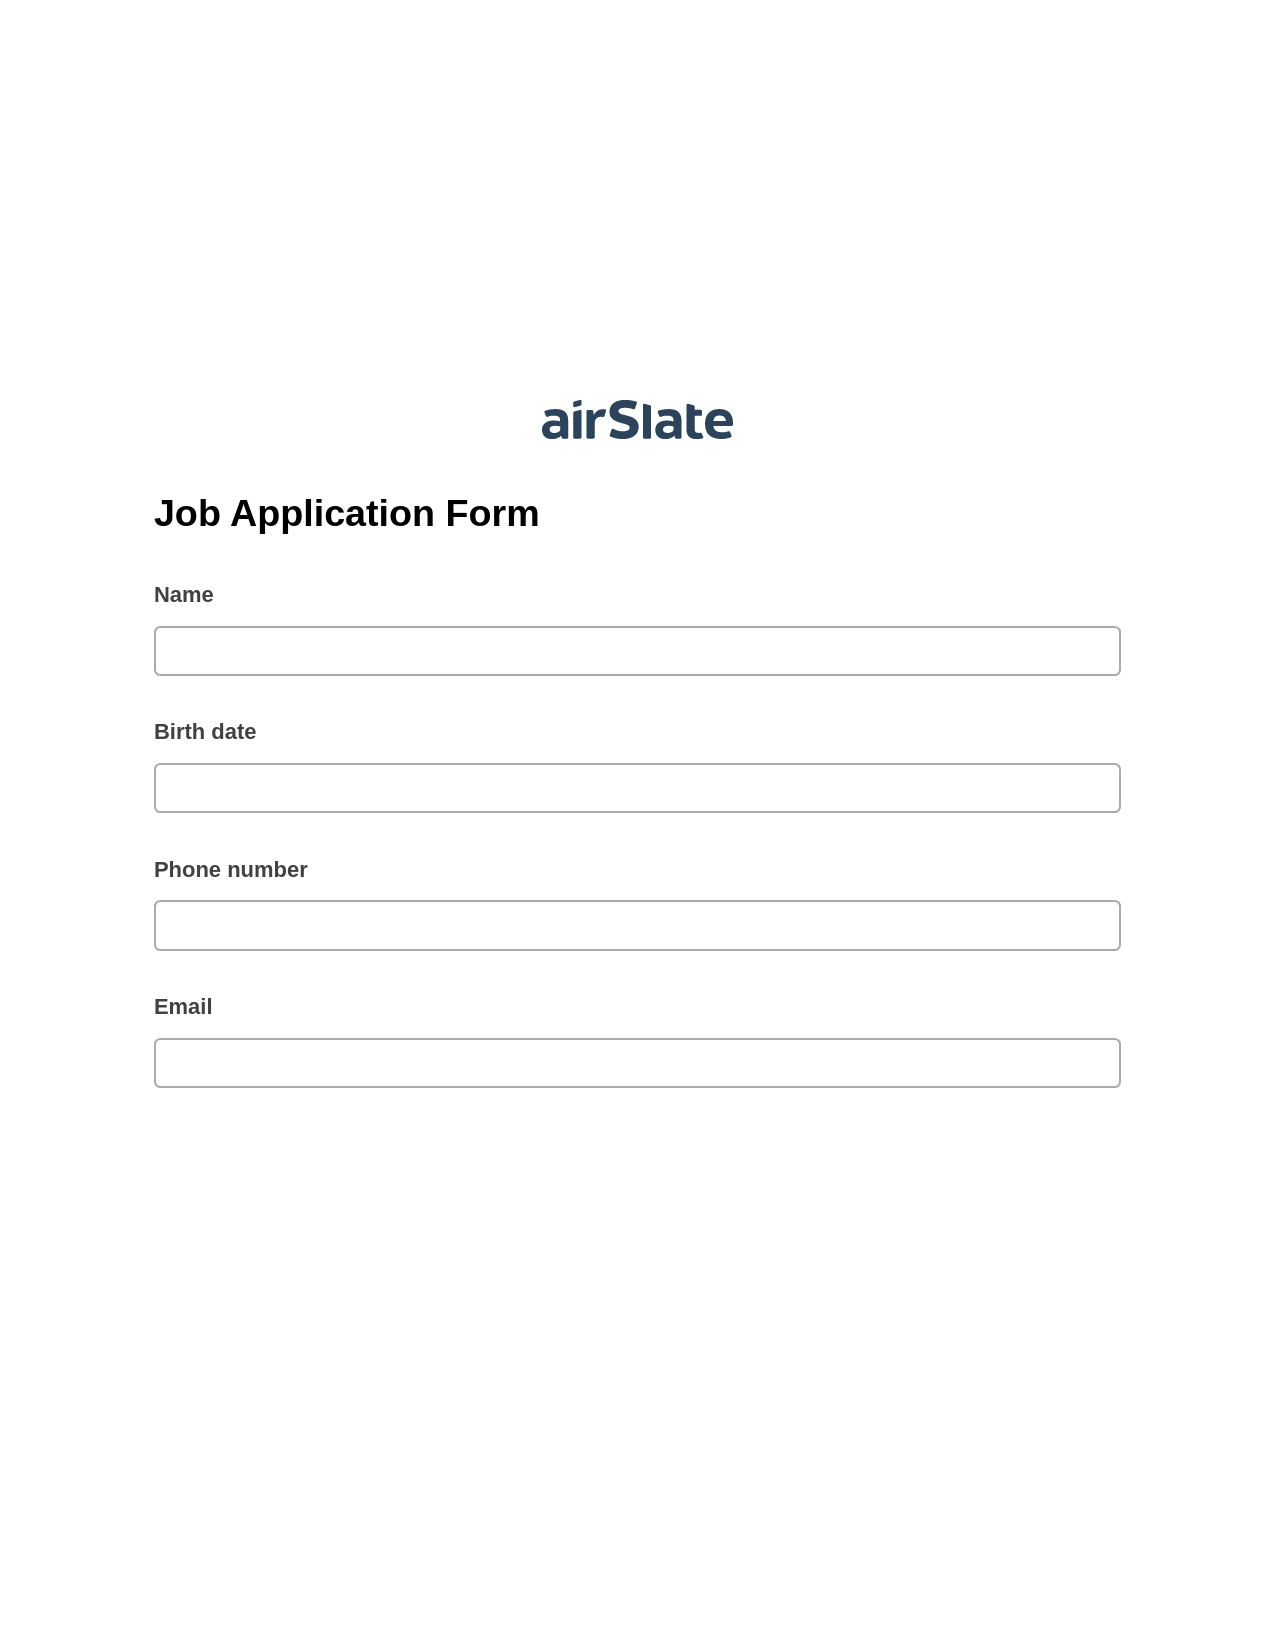 Multirole Job Application Form Pre-fill from Google Sheets Bot, Revoke Access Bot, Box Bot